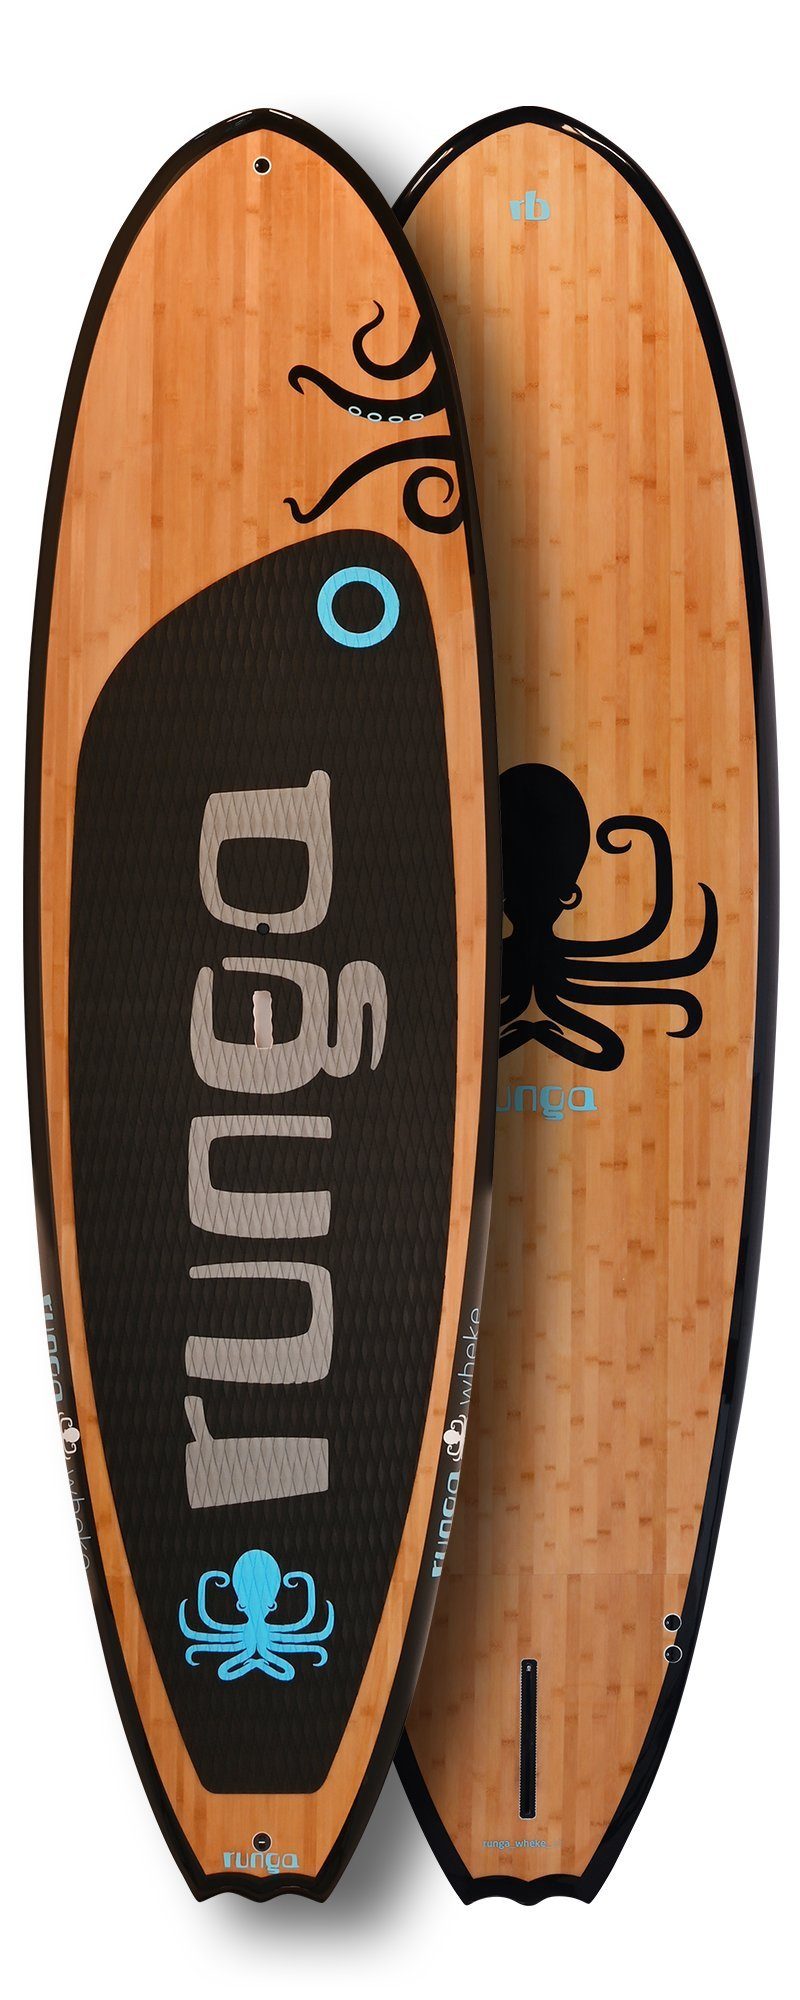 Runga-Boards SUP-Board Runga WHEKE dark BAMBOO Hard Board Stand Up Paddling SUP, Allrounder, (9.5, Inkl. coiled leash & 3-tlg. Finnen-Set)